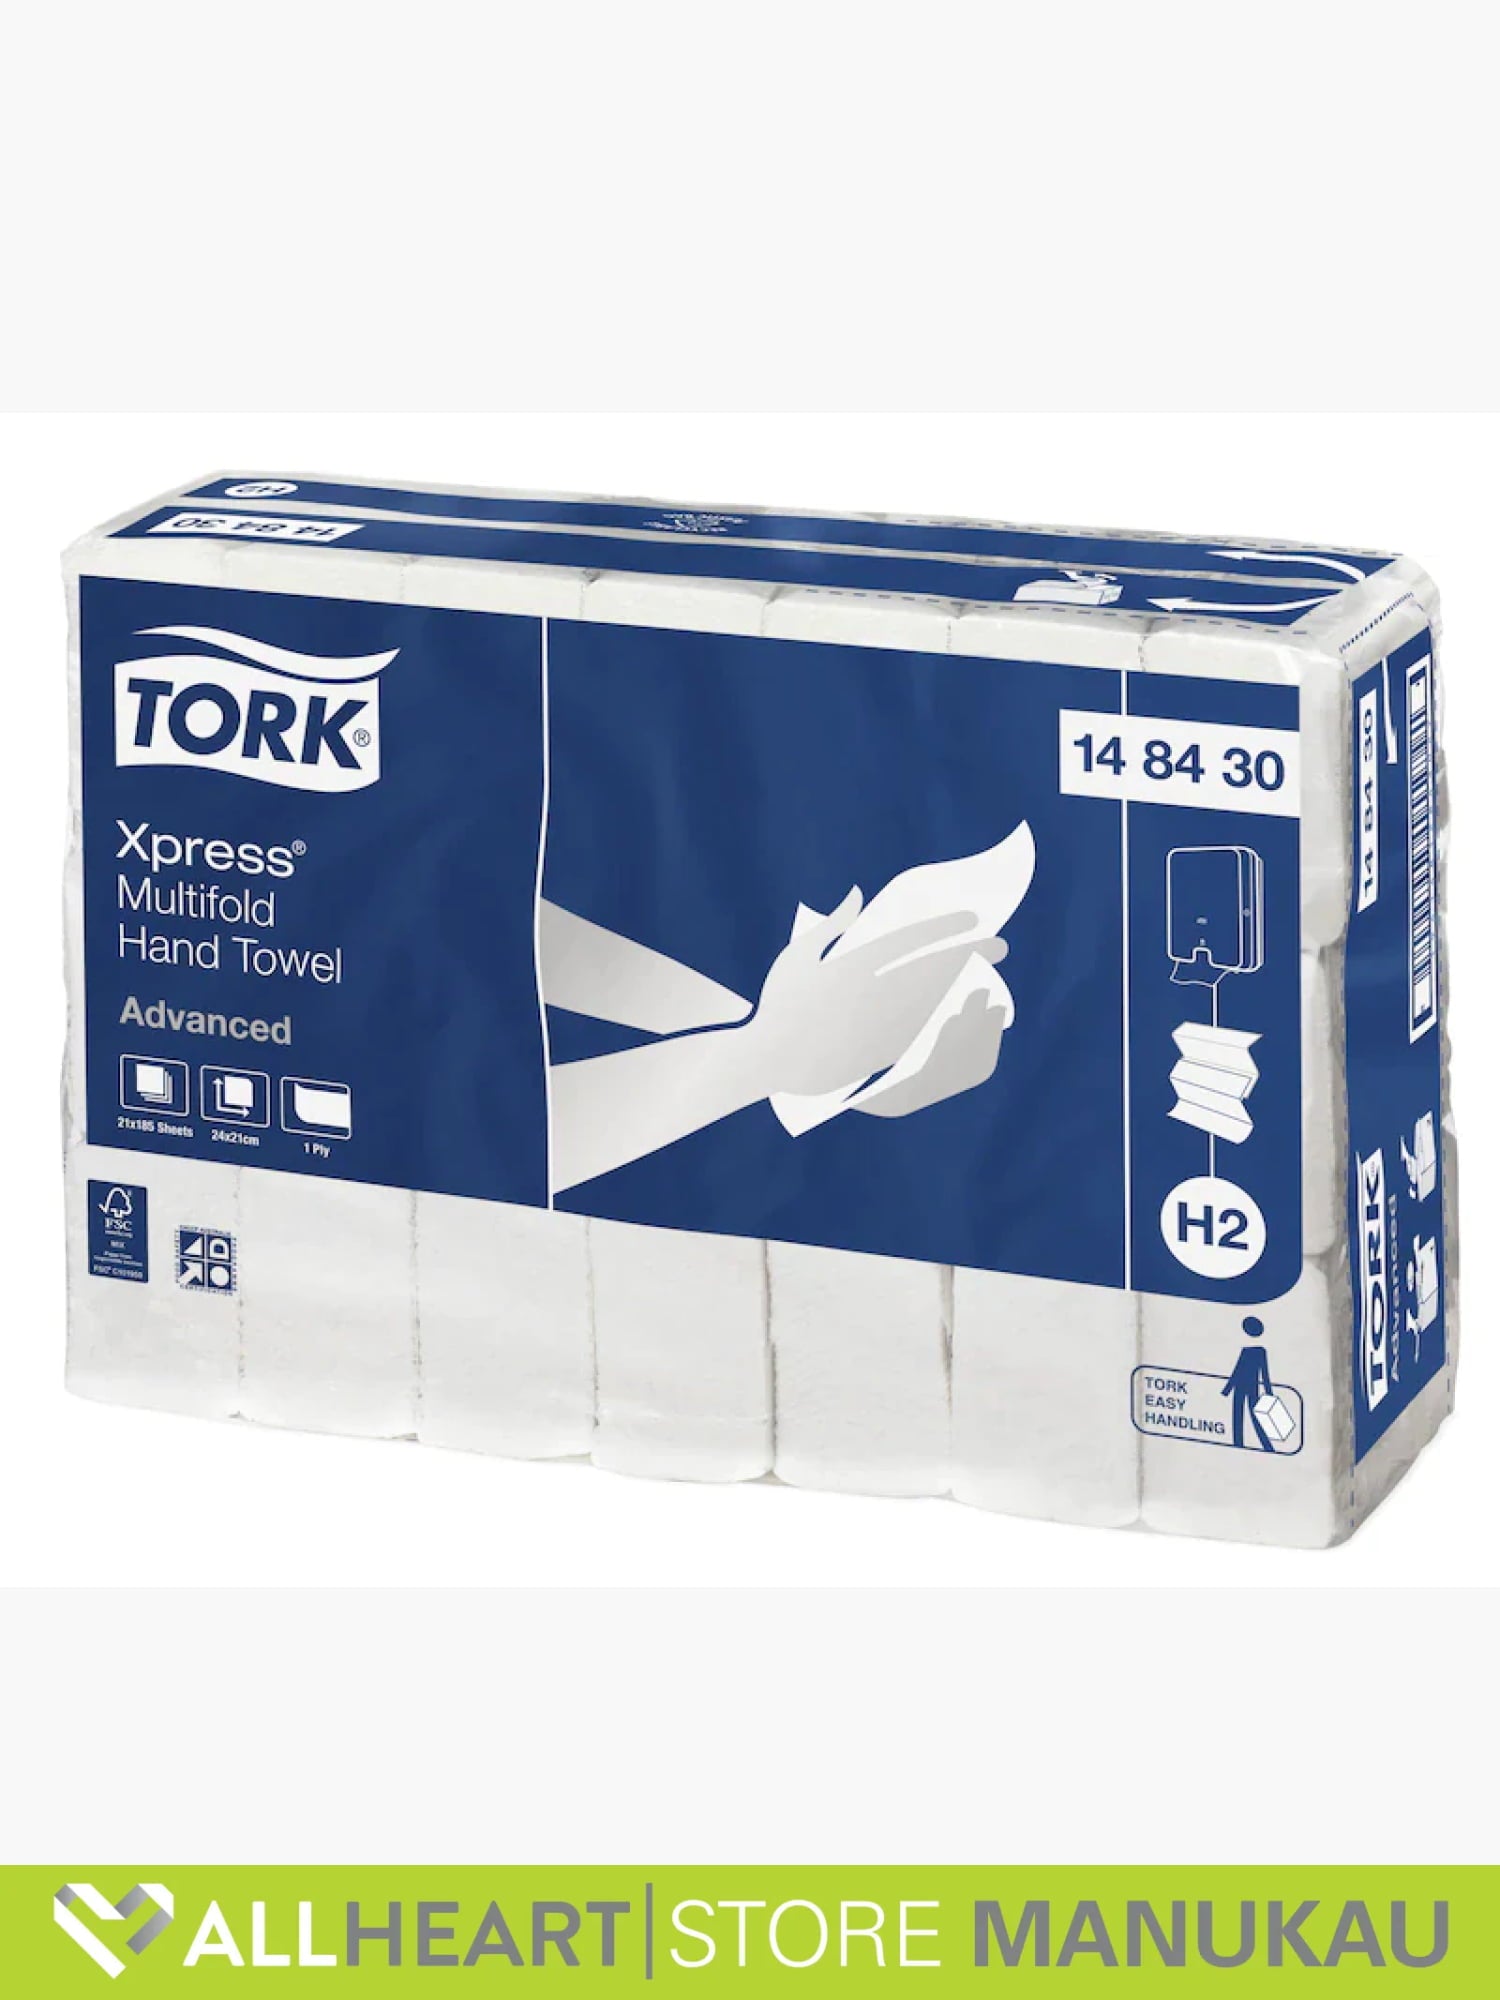 Tork Xpress - Multi Hand Towel - H2 14 84 30